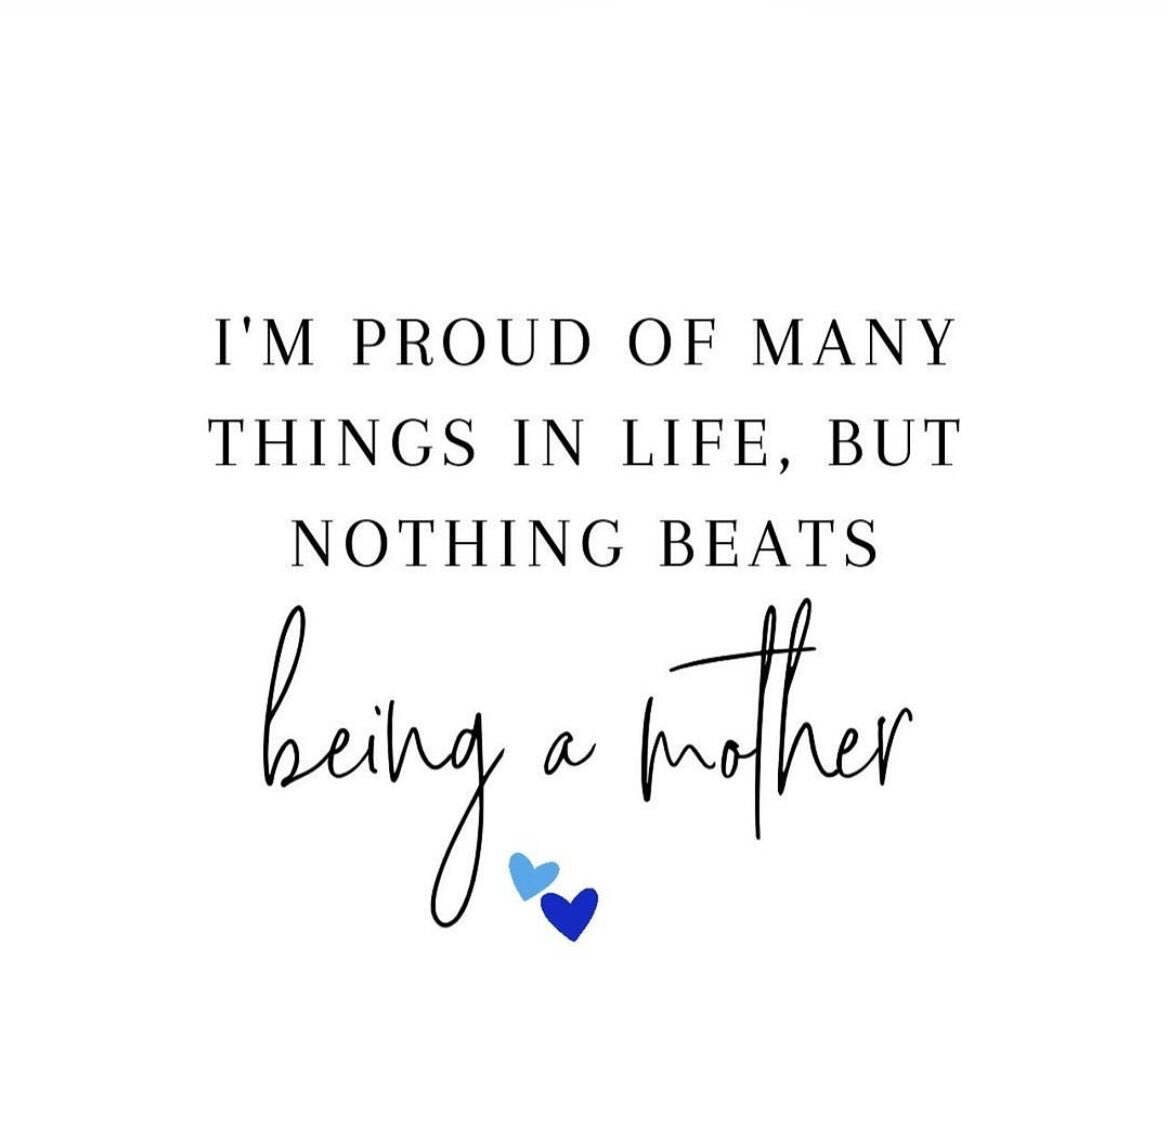 Best accomplishment in my life is being his mama 💙
.
.
.
.
.
.
.
.
#boymom #plannerlove #planning #coaching #mentalhealth #sslfcare #torontorealtor #broker #momblogs #bossbabe #entrepreneur #businesswomen #realtor #blogger #bloggerstyle #branding #q